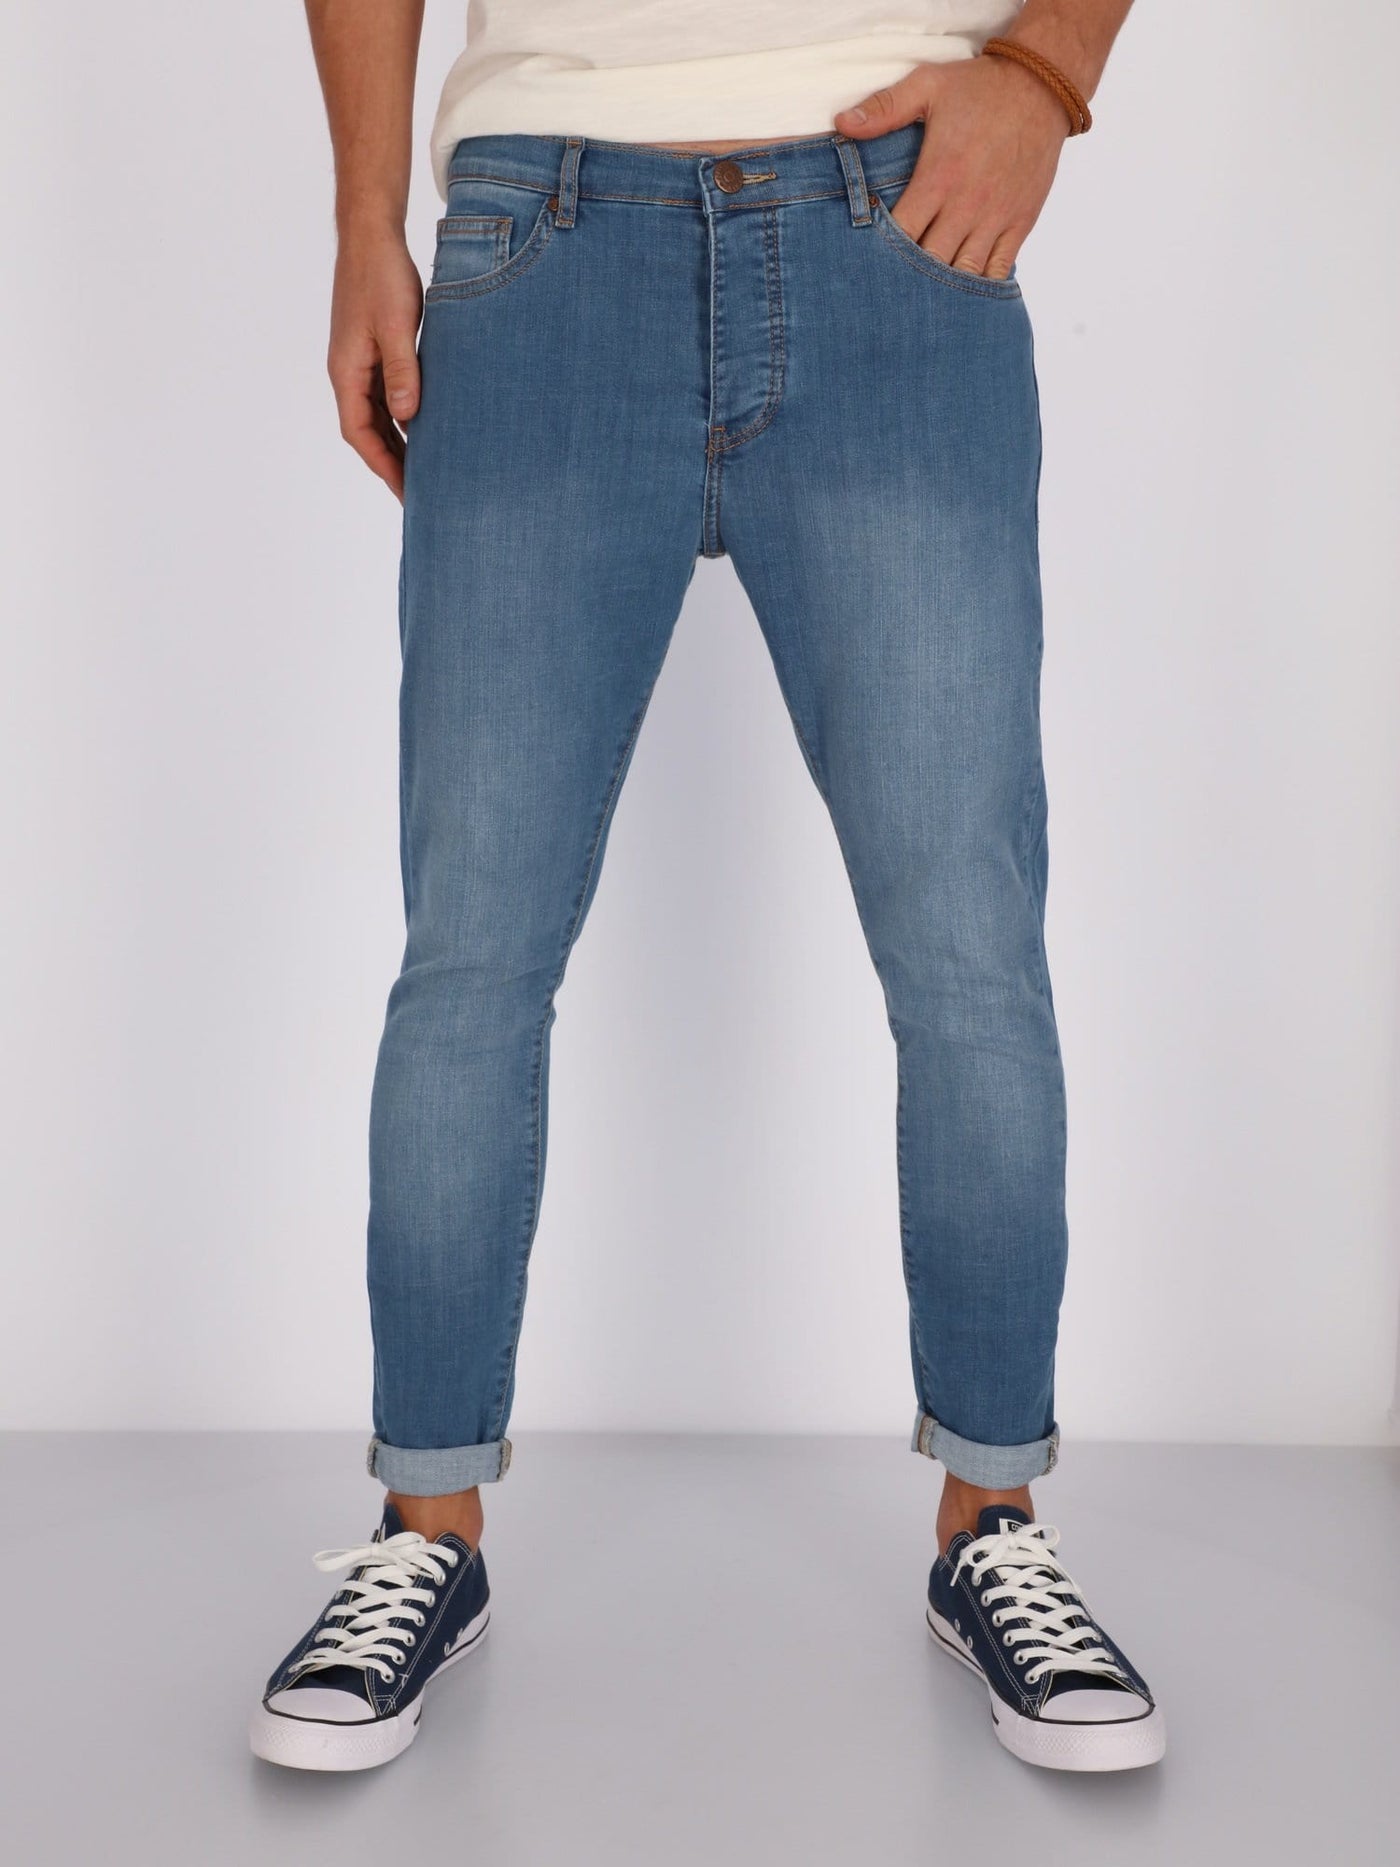 OR Pants & Shorts Carrot Cut Jeans Pants